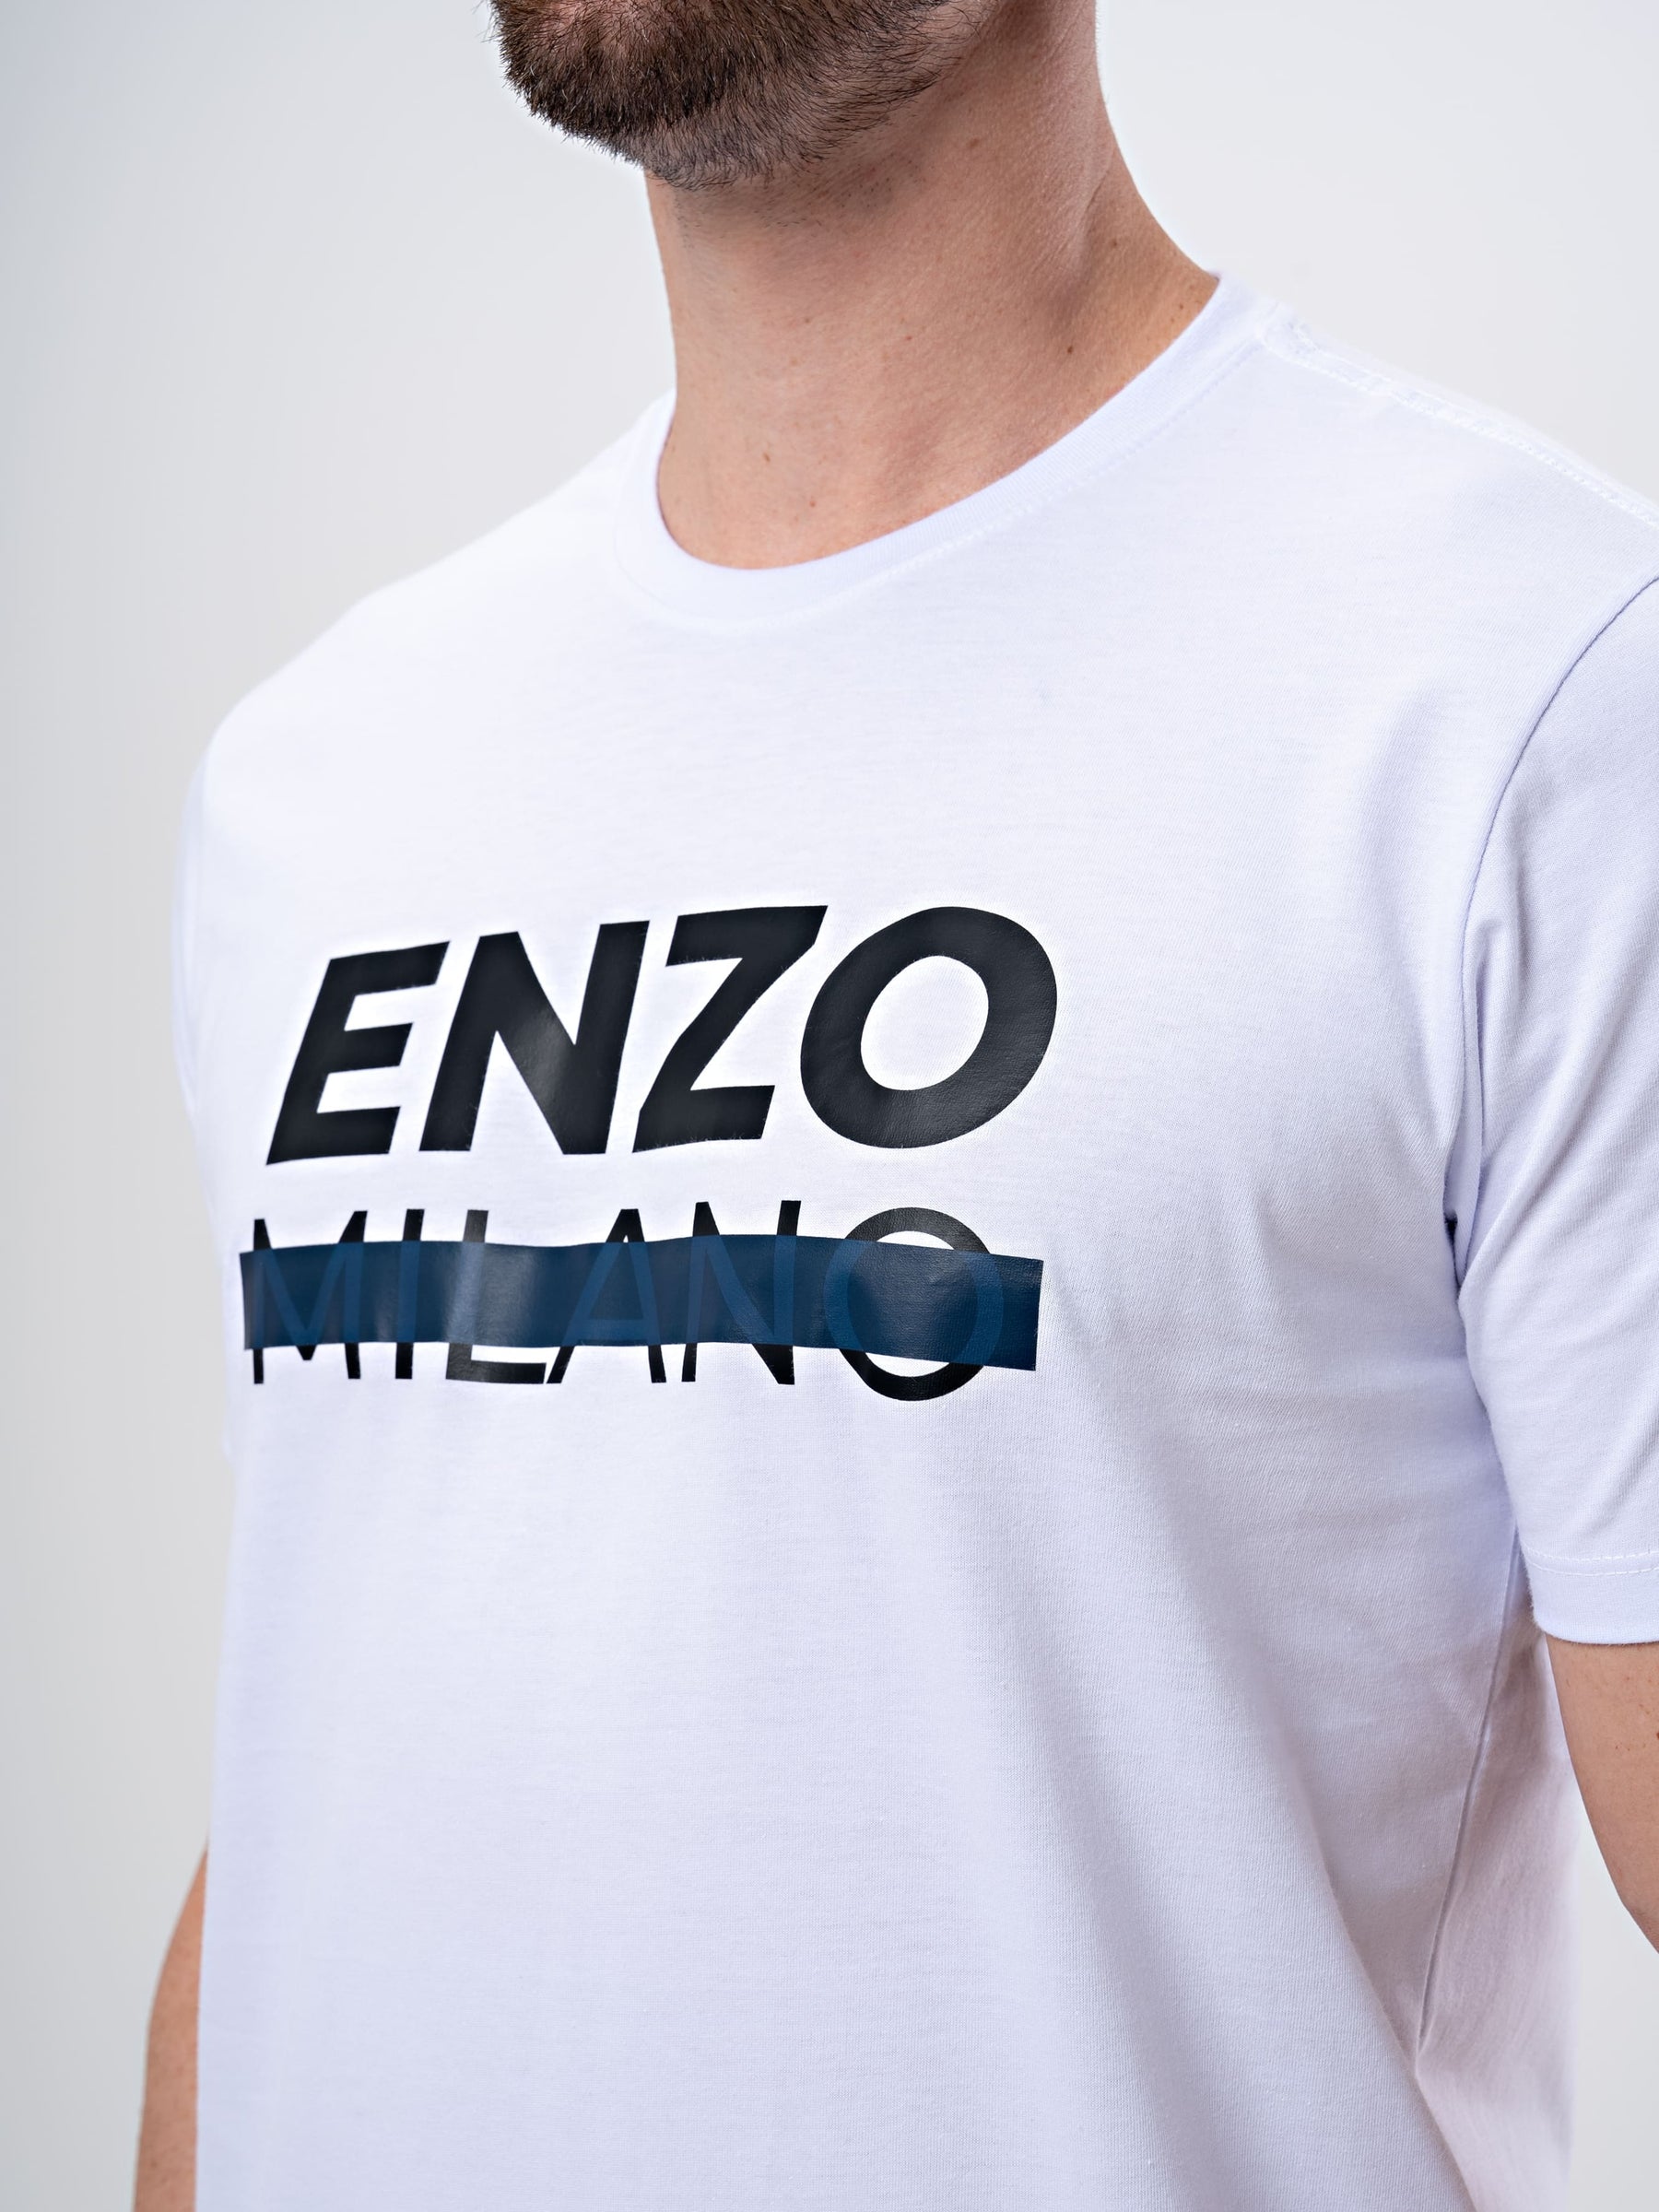 Camiseta Soft Enzo Milano - Hellik Store